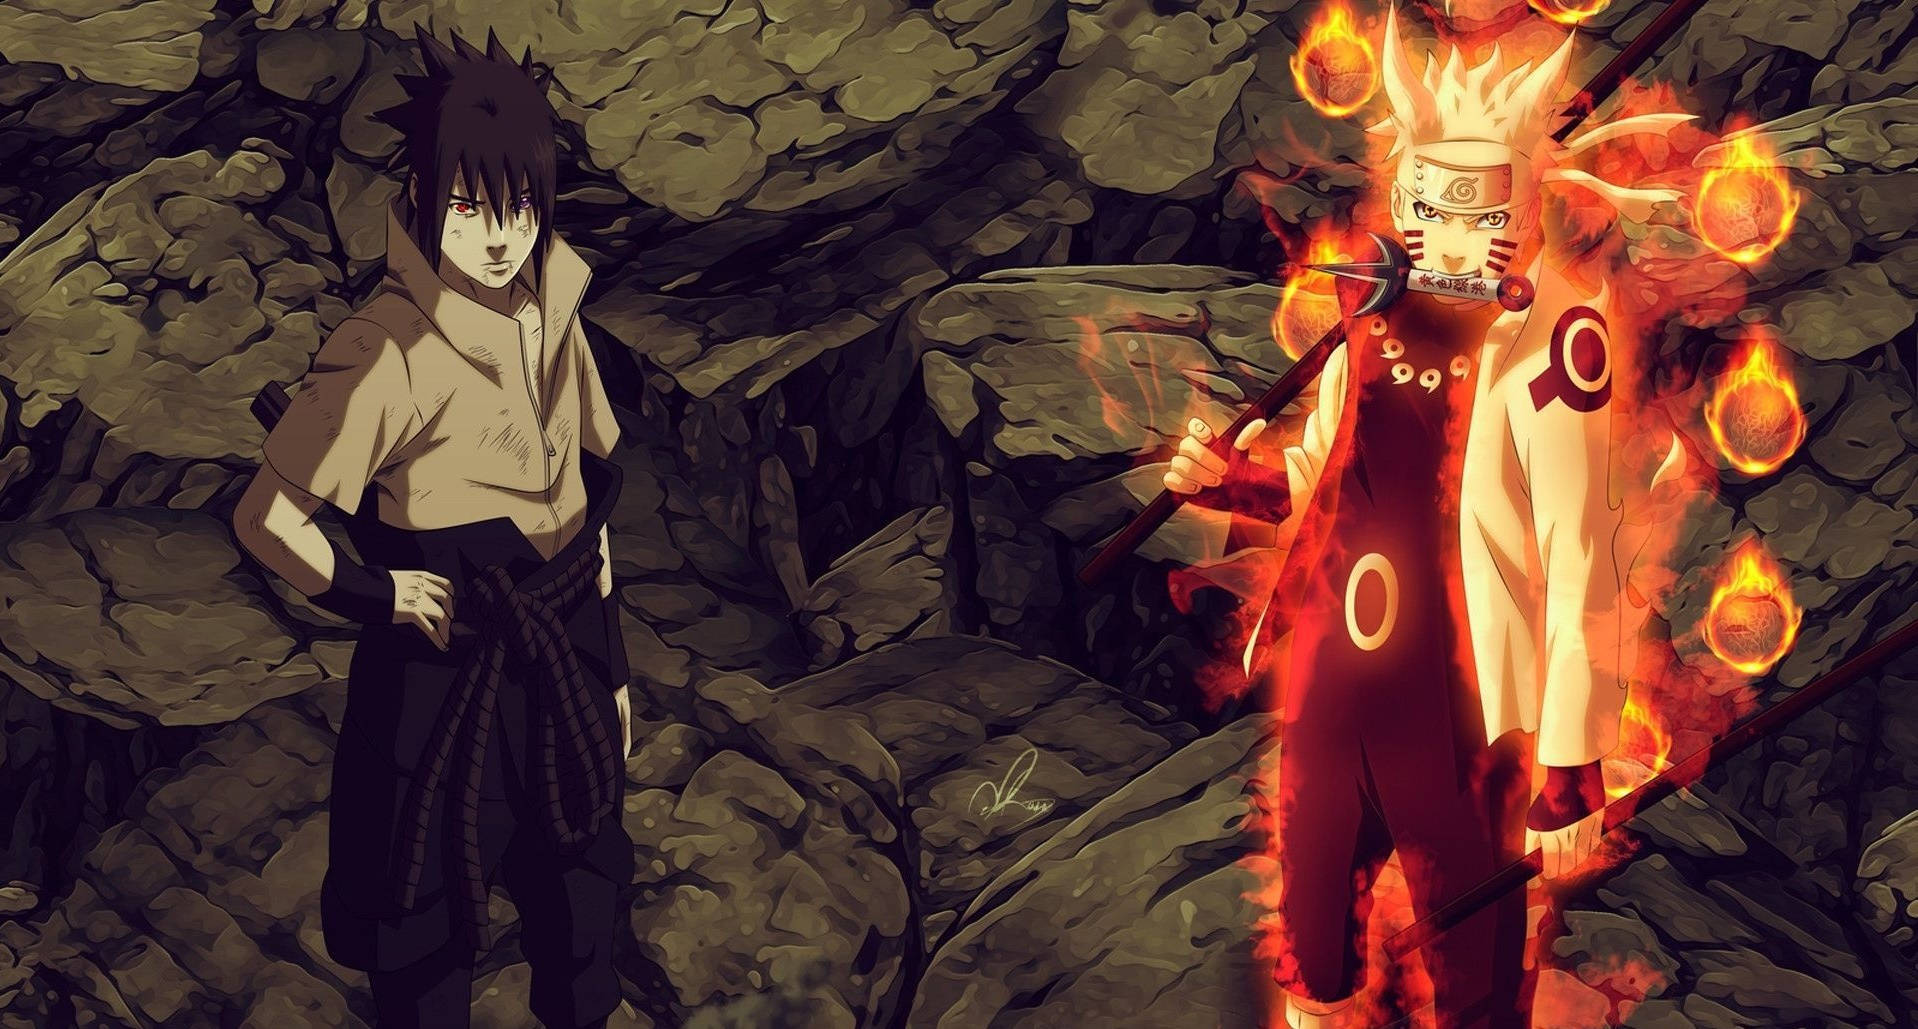 Anime Naruto Fighting Together With Sasuke Uchiha Background